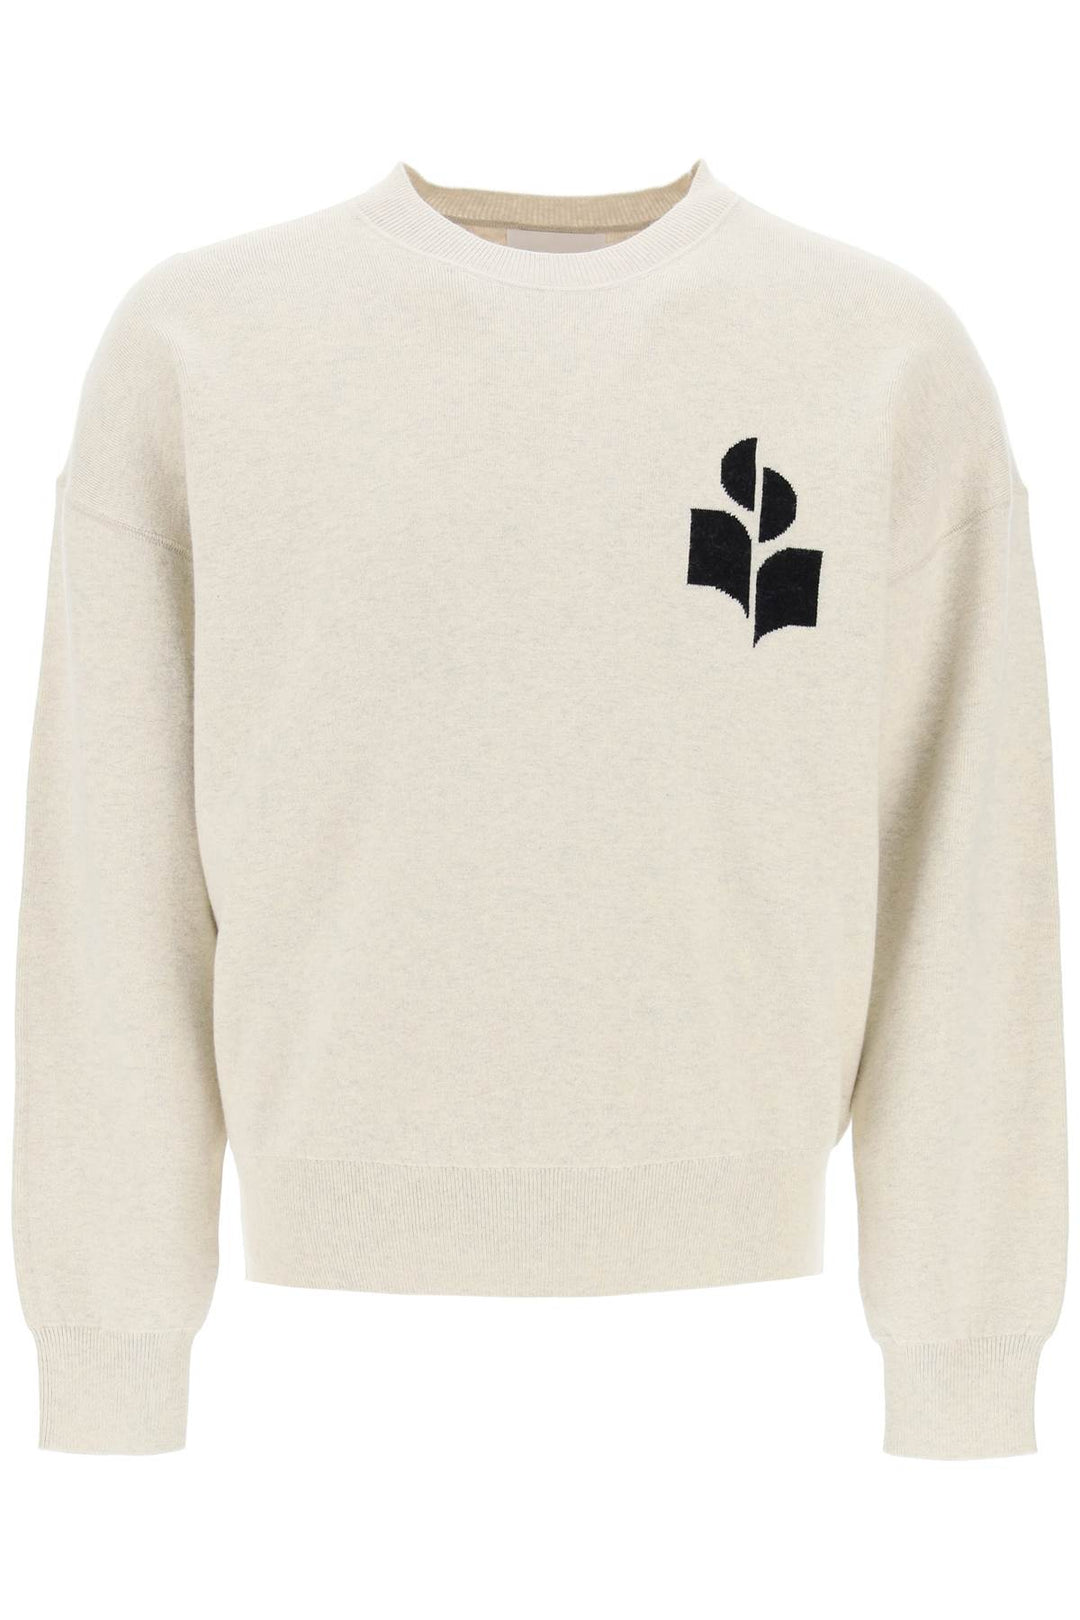 Marant wool cotton atley sweater-0